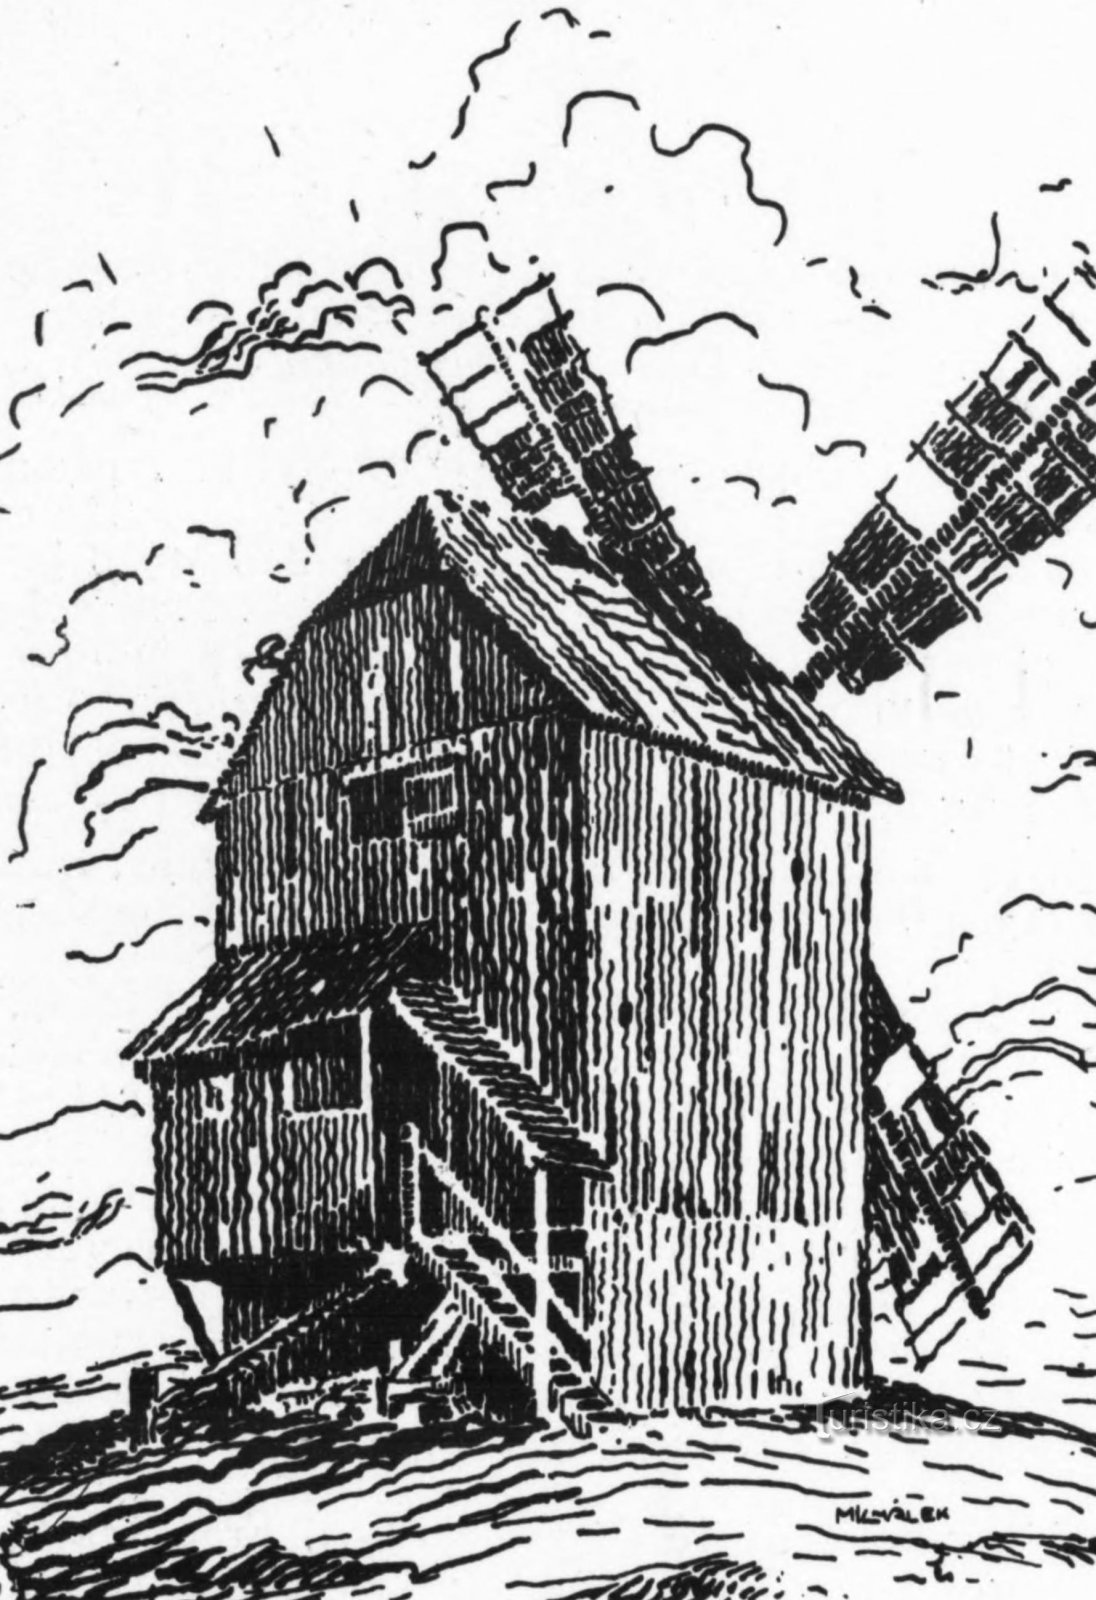 F. Michálek の素描に基づくLibrantice の風車